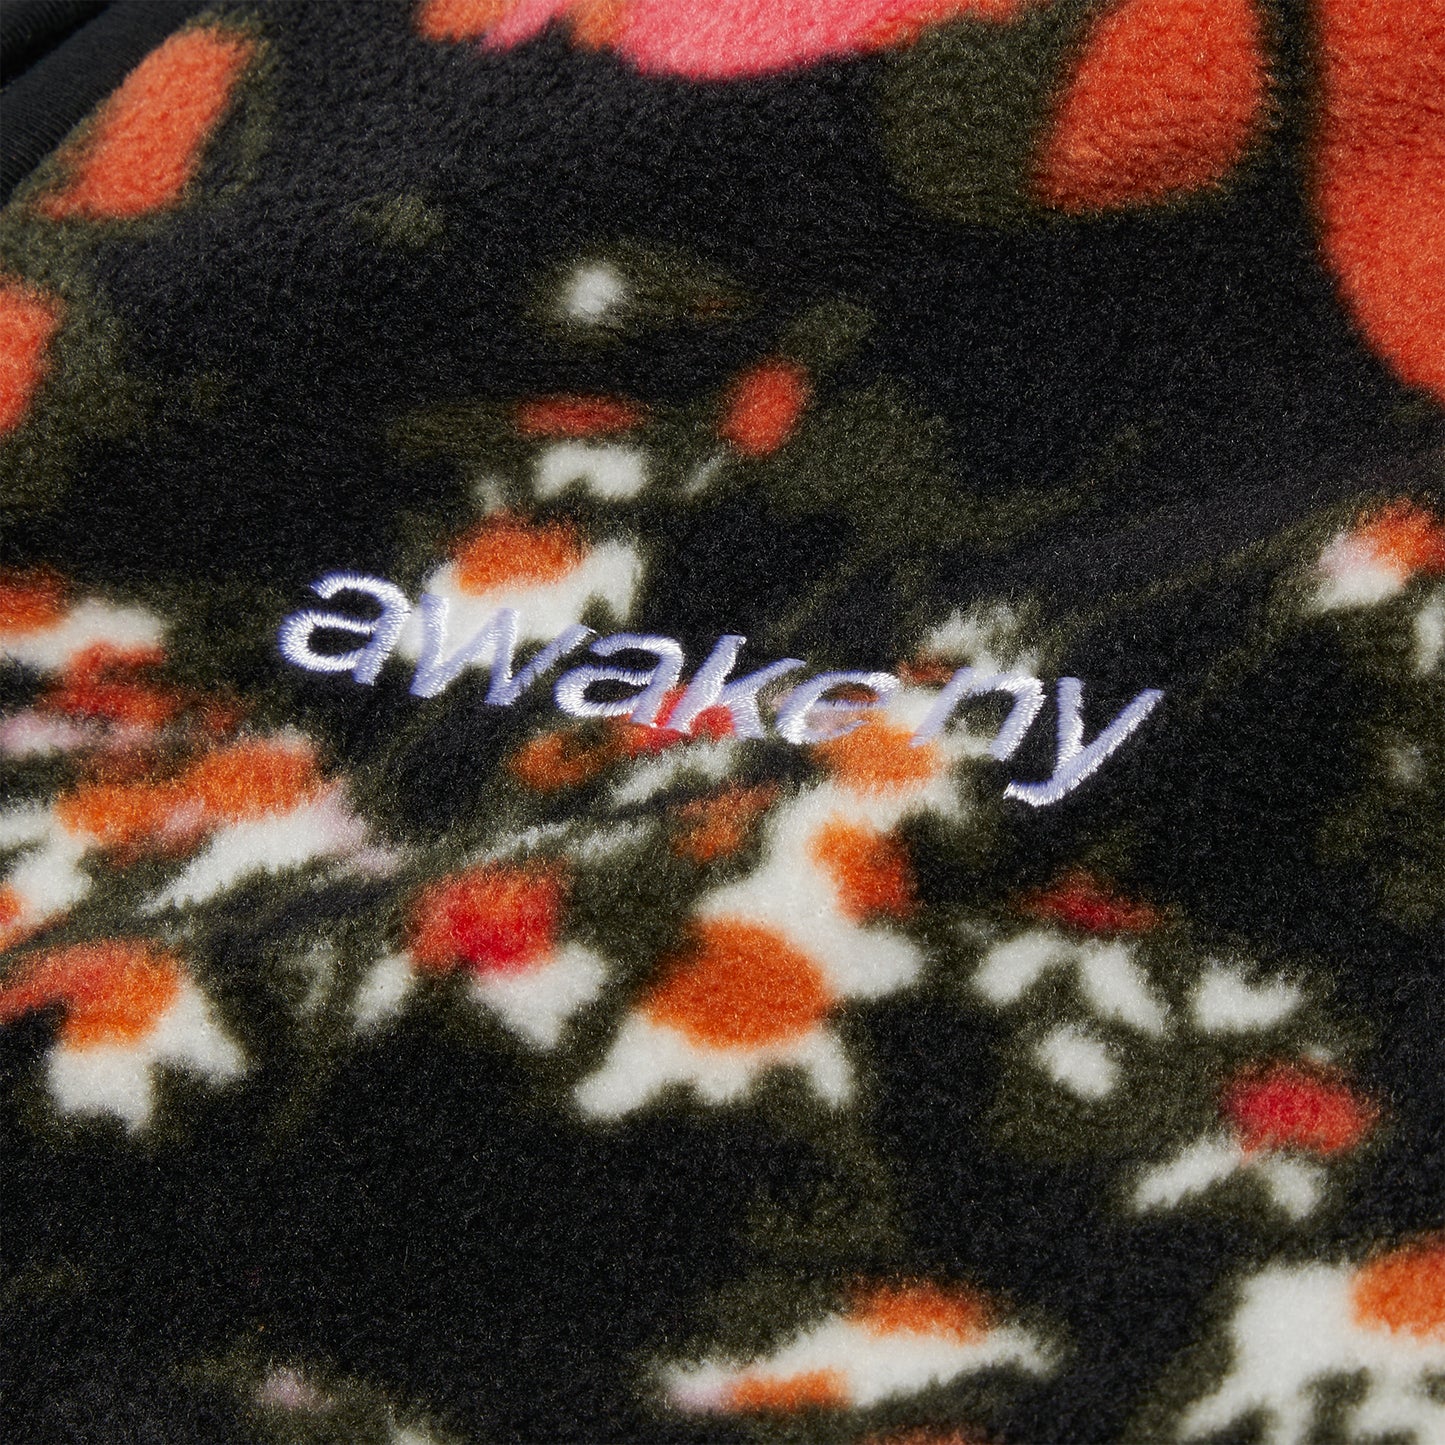 Awake NY Fleece Floral Jacket (Multi)